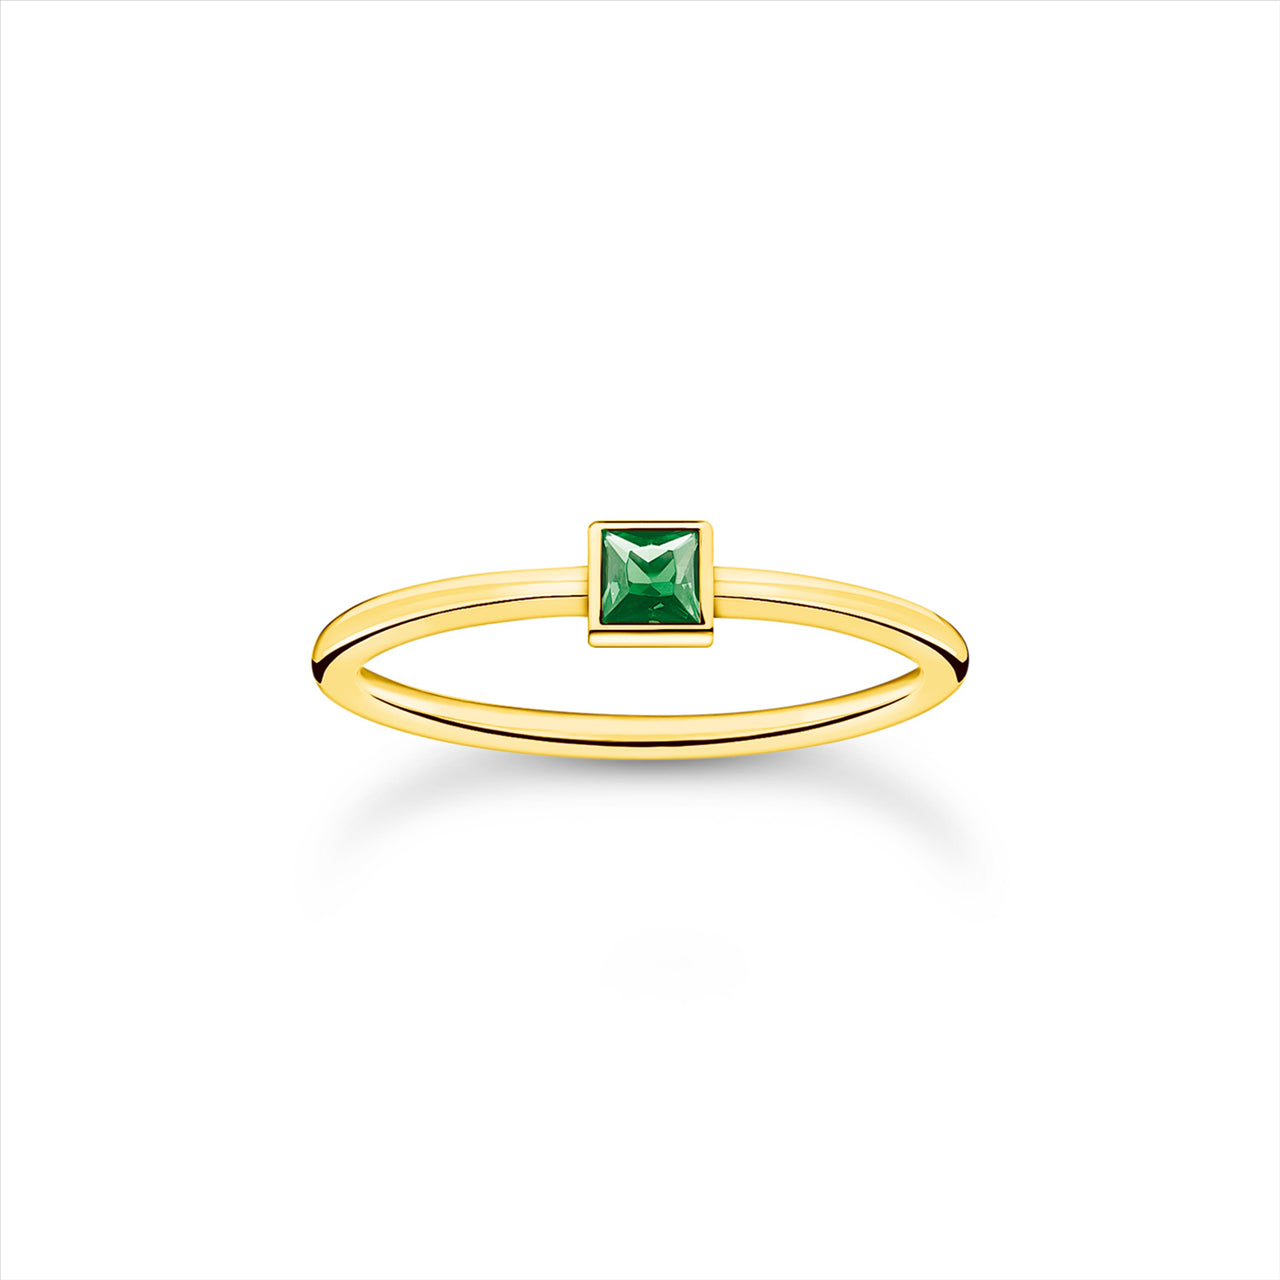 Thomas Sabo Green Cubic Zirconia Dress Ring.